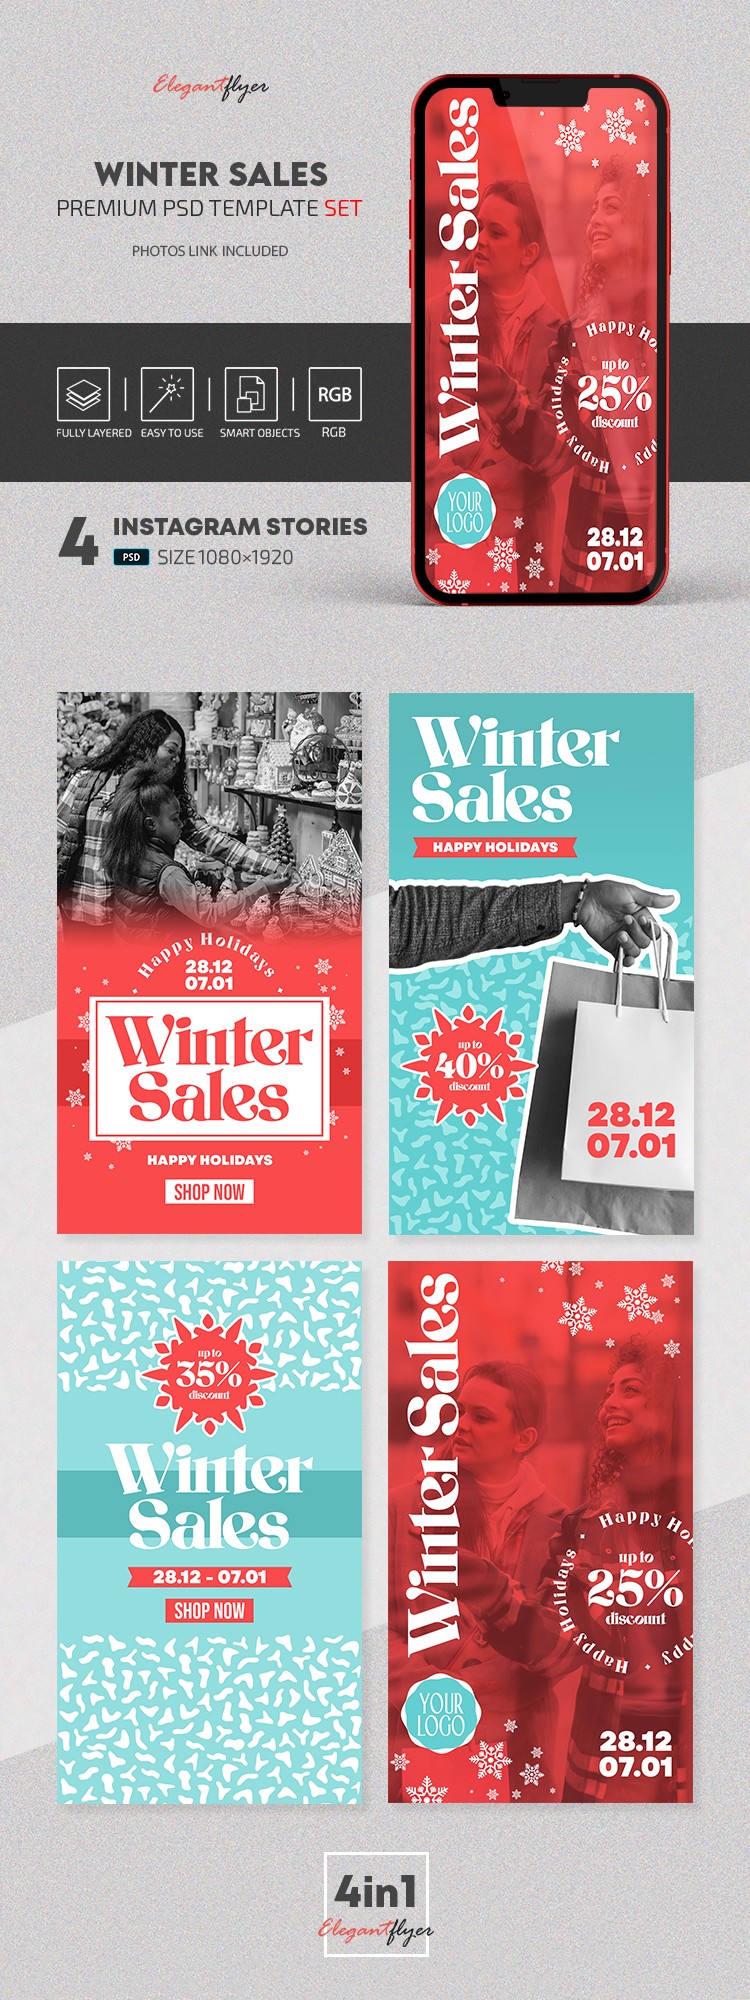 Winter Sales by ElegantFlyer